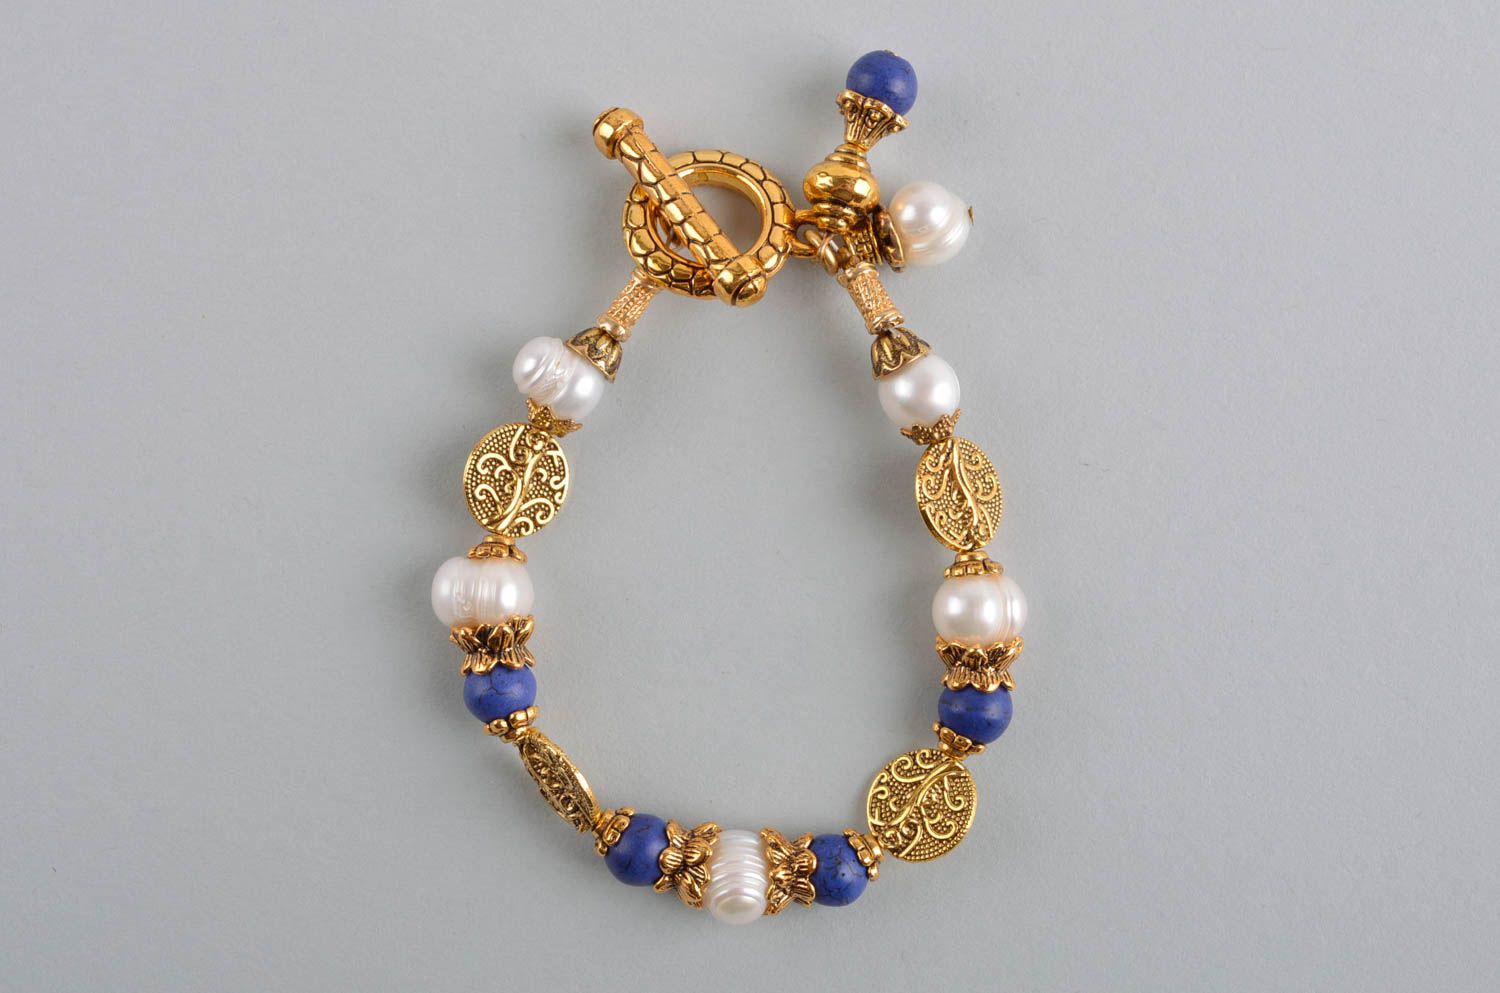 Homemade white and blue beads charm bracelet gemstone jewelry for women photo 2